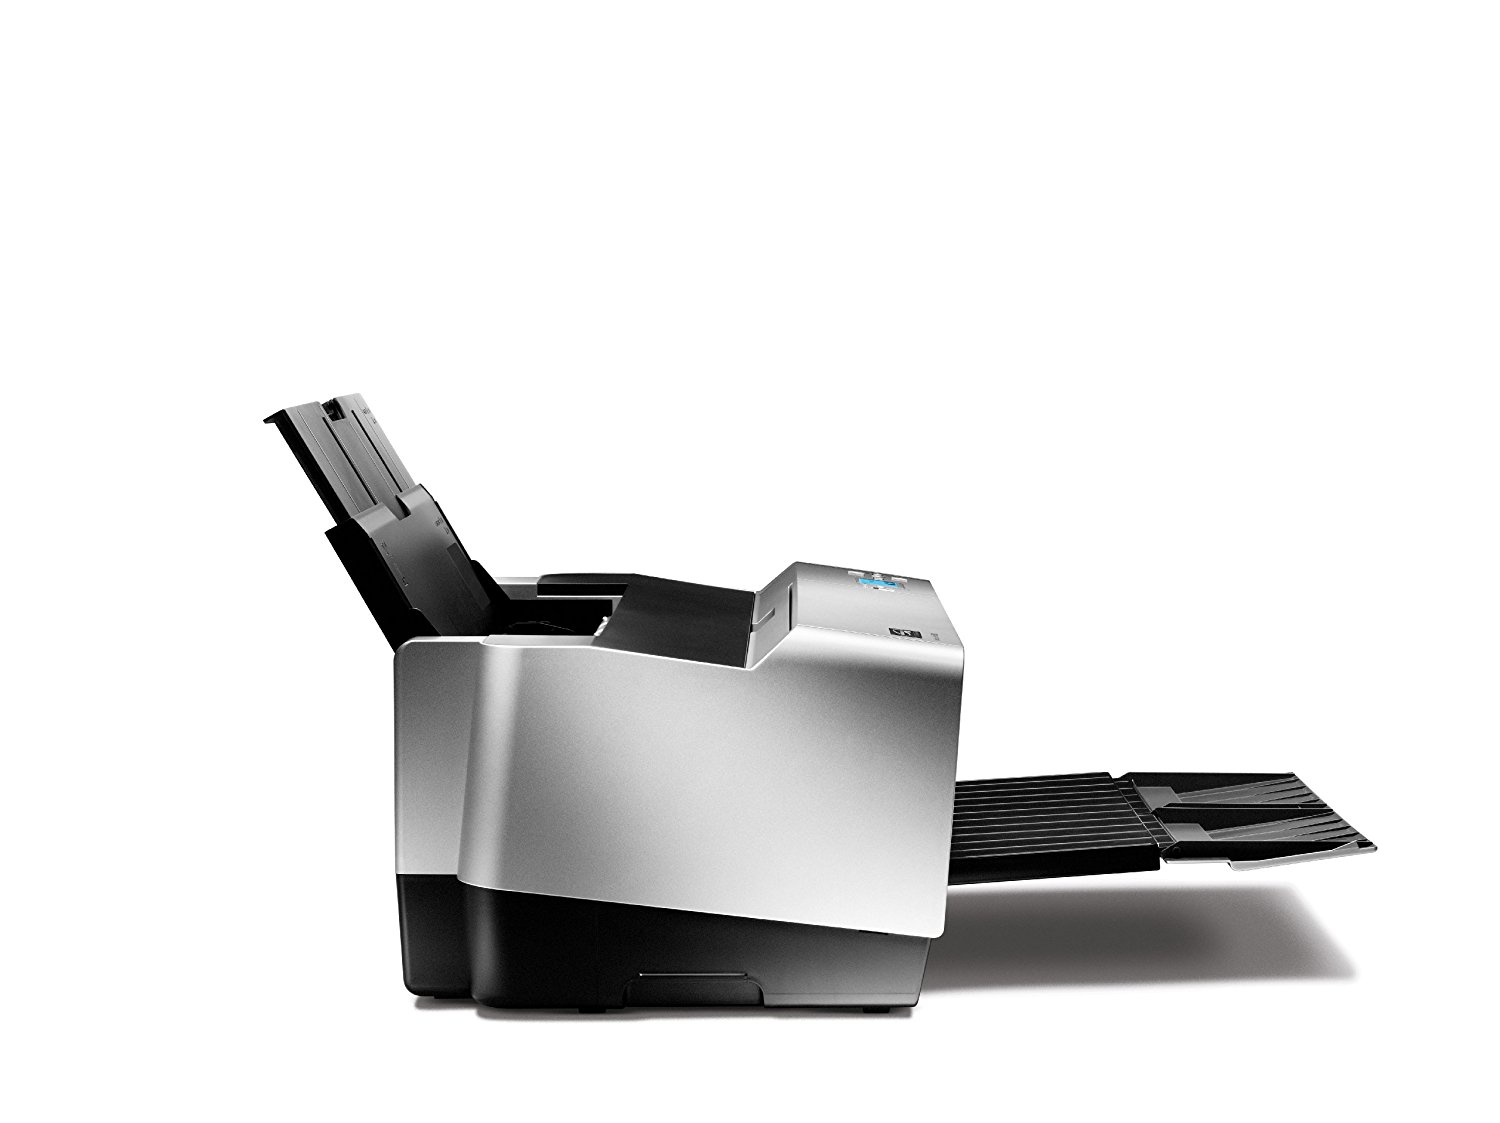 Epson Stylus Pro 3880 Color Inkjet Printer Ca61201 Vm N2 Free Image Download 0021